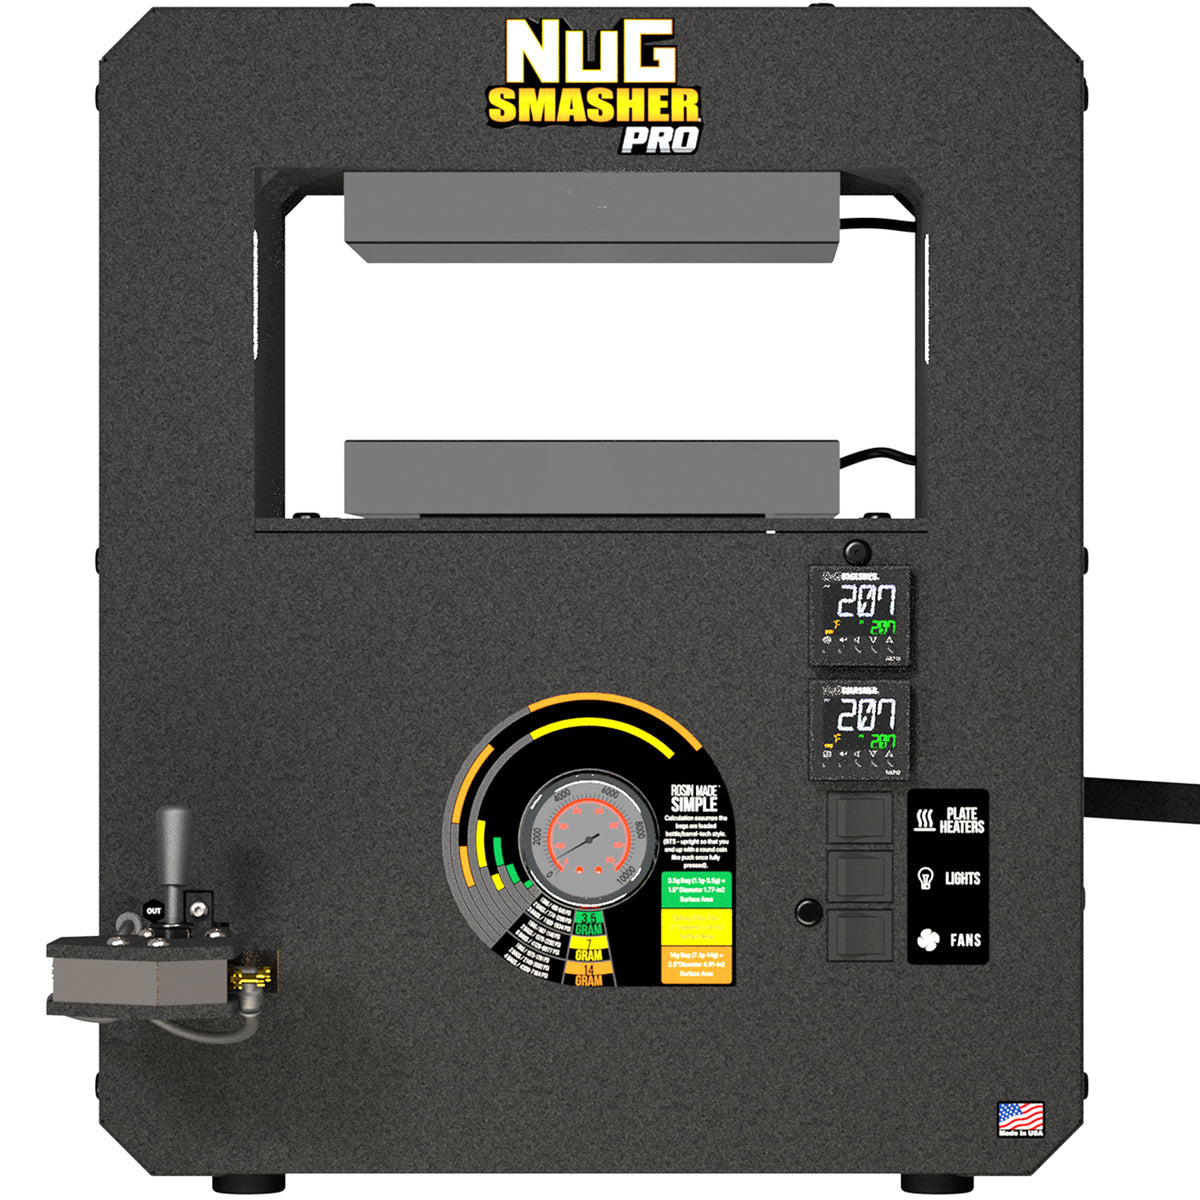 NugSmasher Pro Touch 20 Ton Rosin Press